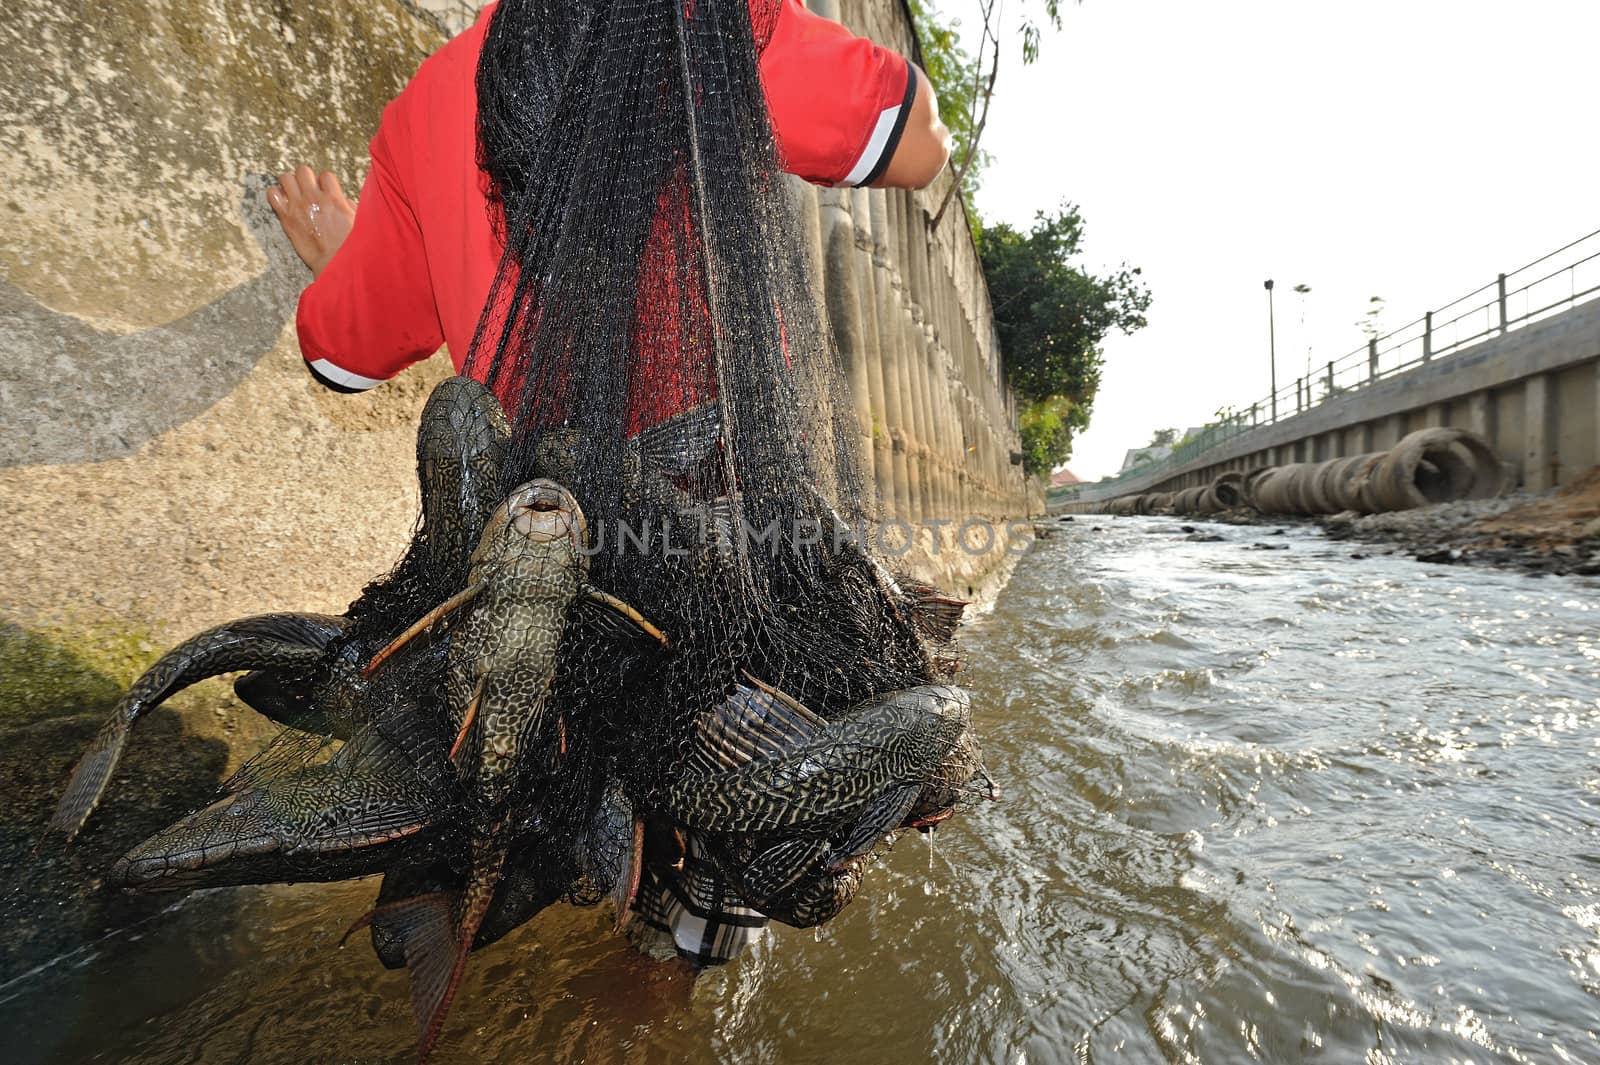 Plecostumus fish (sucker fish) outbreak in river, Thailand. by think4photop